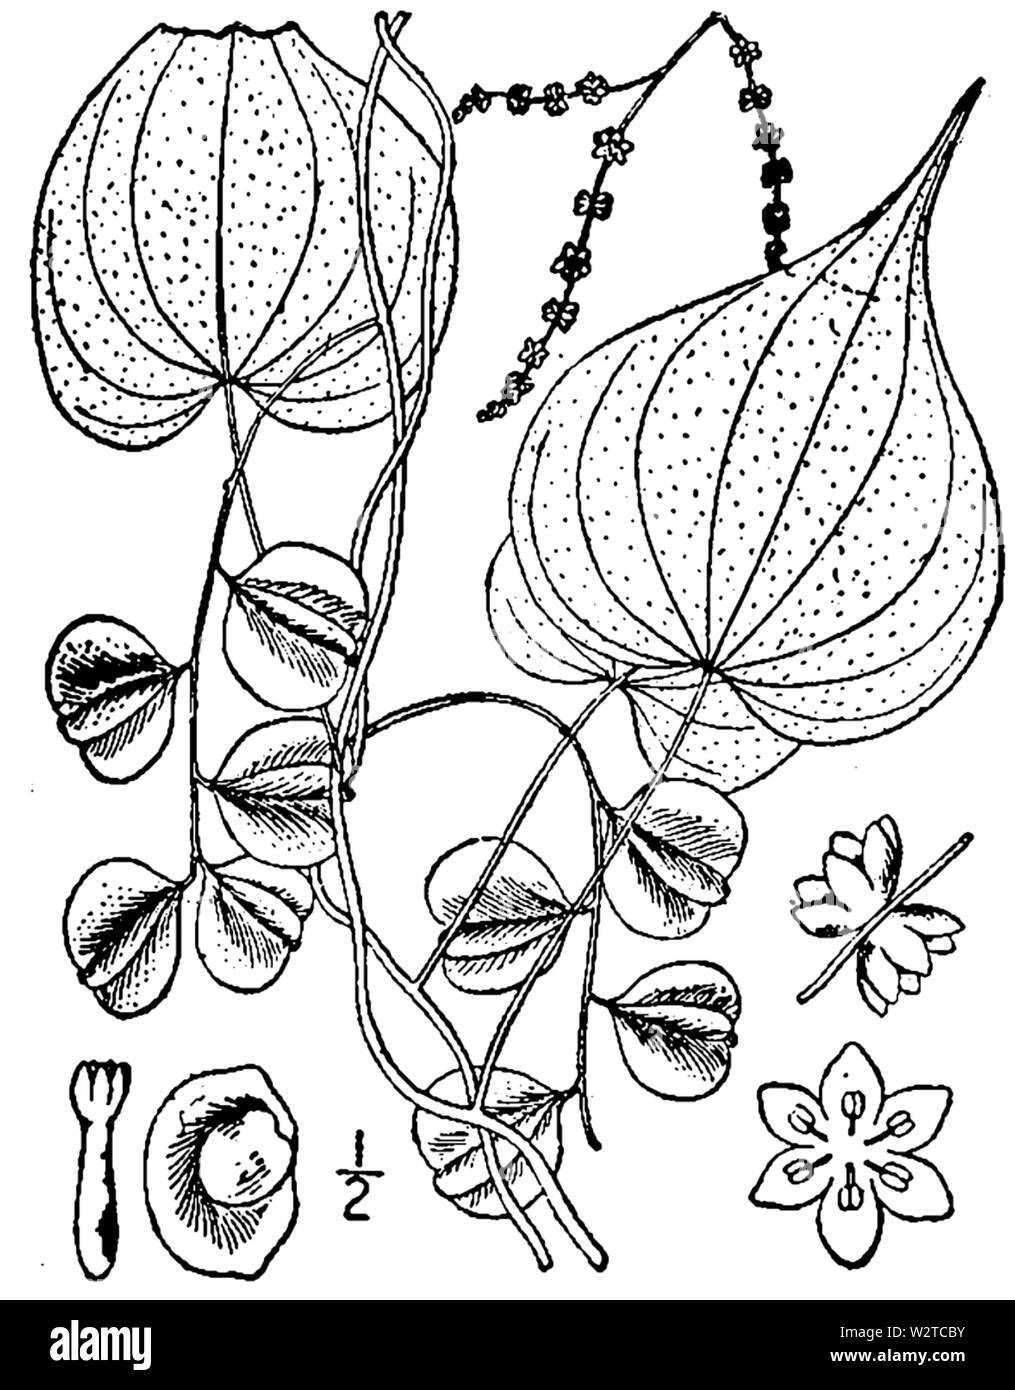 Botanical illustration of Dioscorea villosa from 1913. Stock Photo